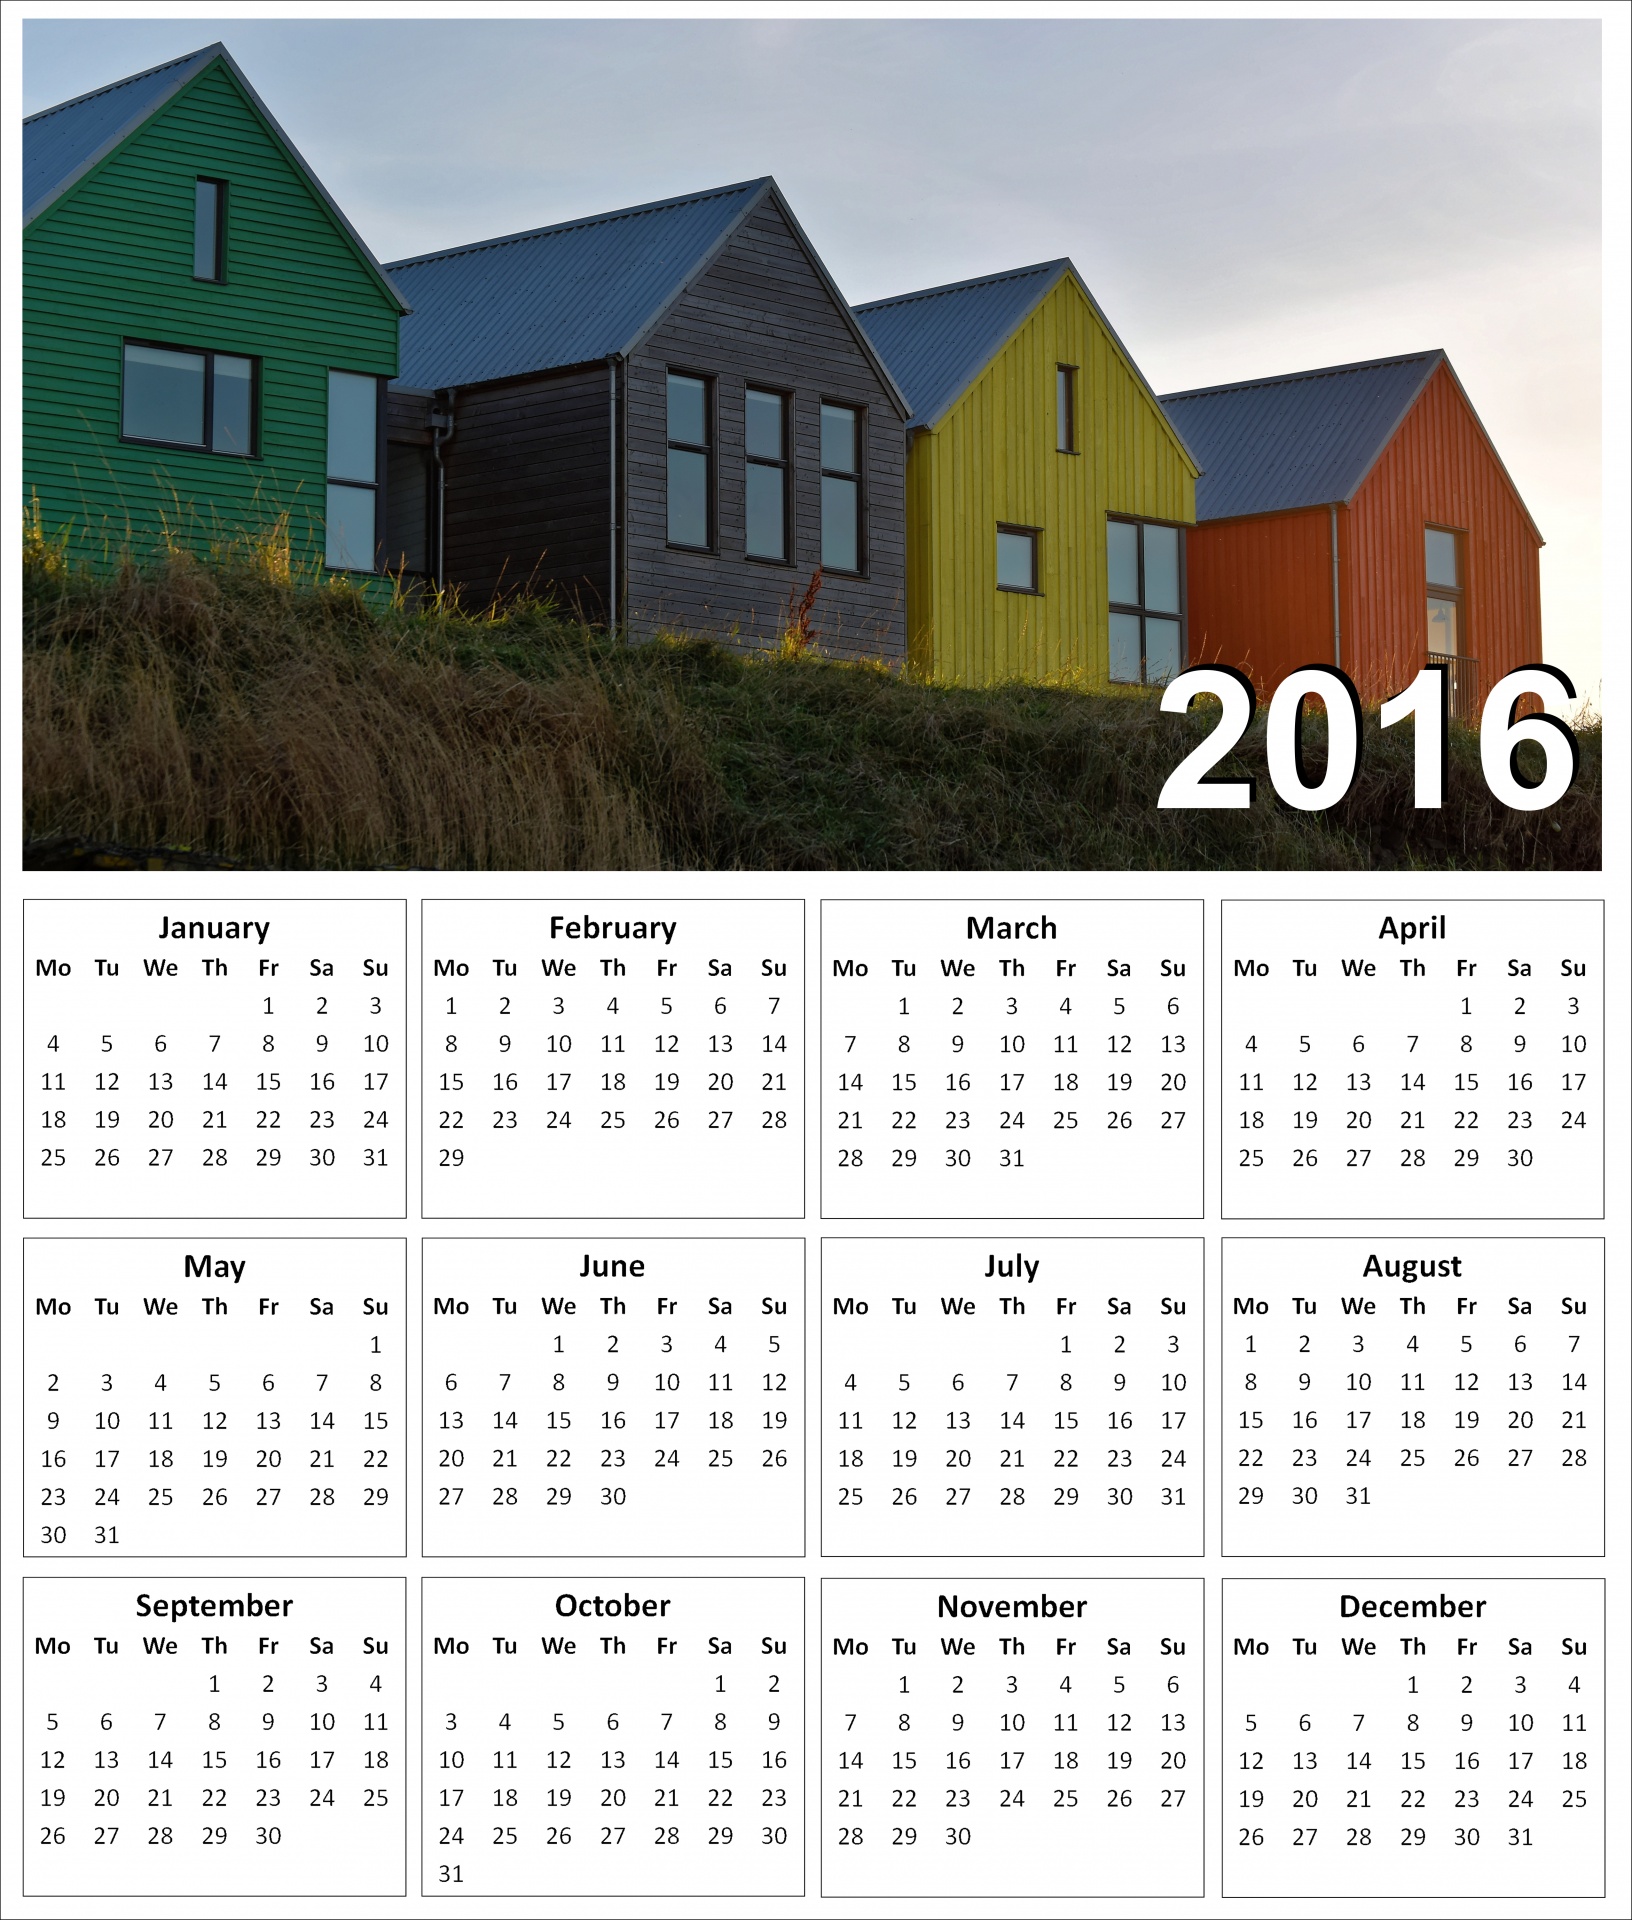 2016 Coloured Houses Calendar